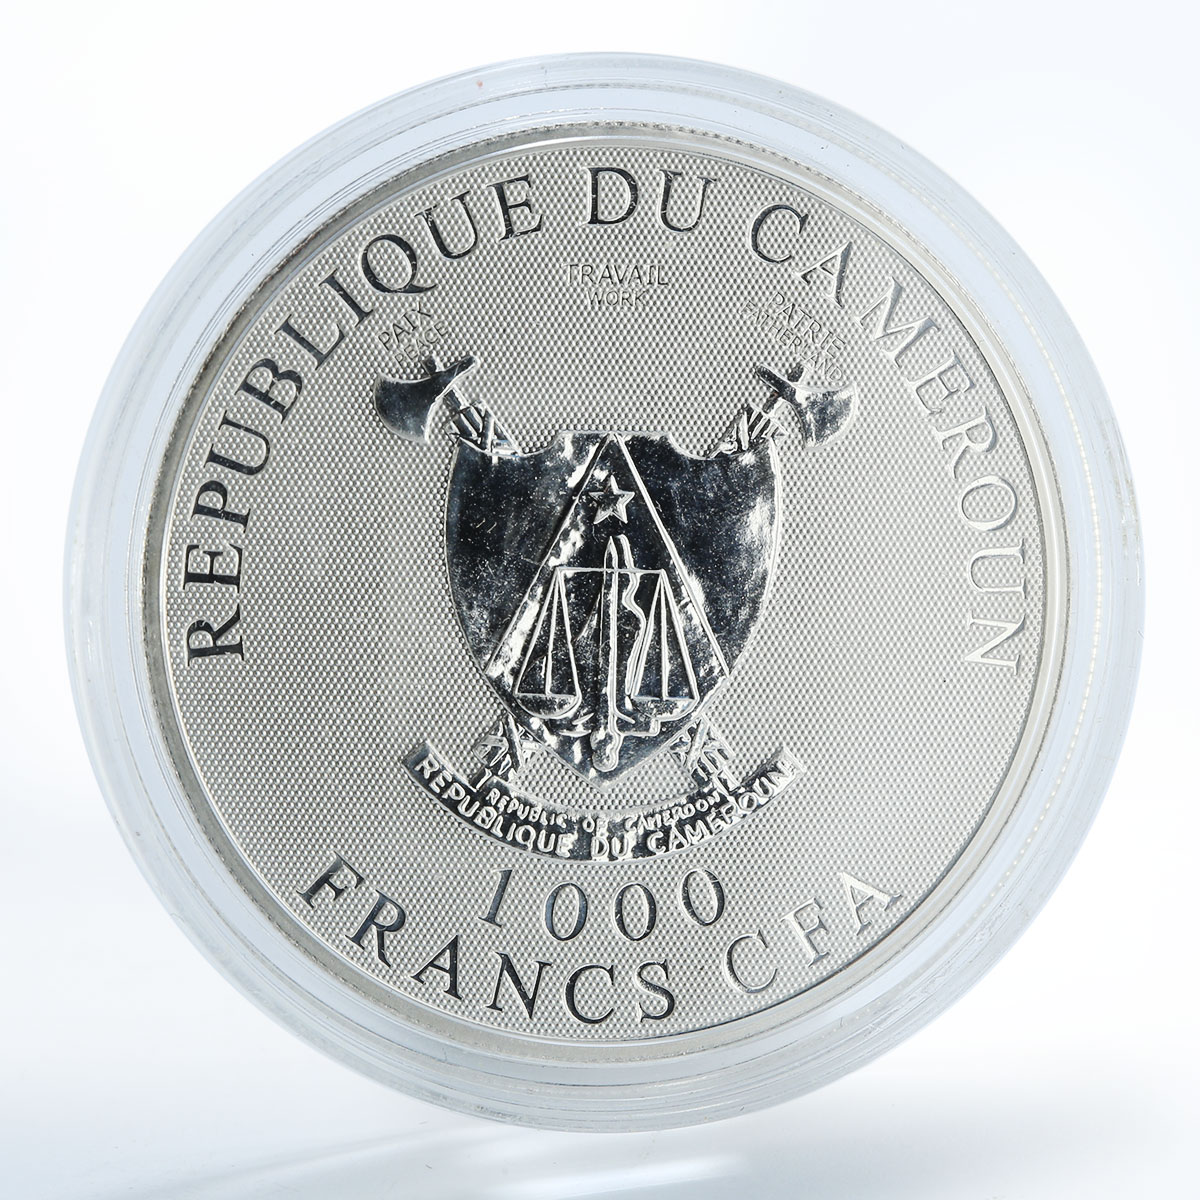 Cameroon 1000 francs Turin Shroud hologram silver coin 2010